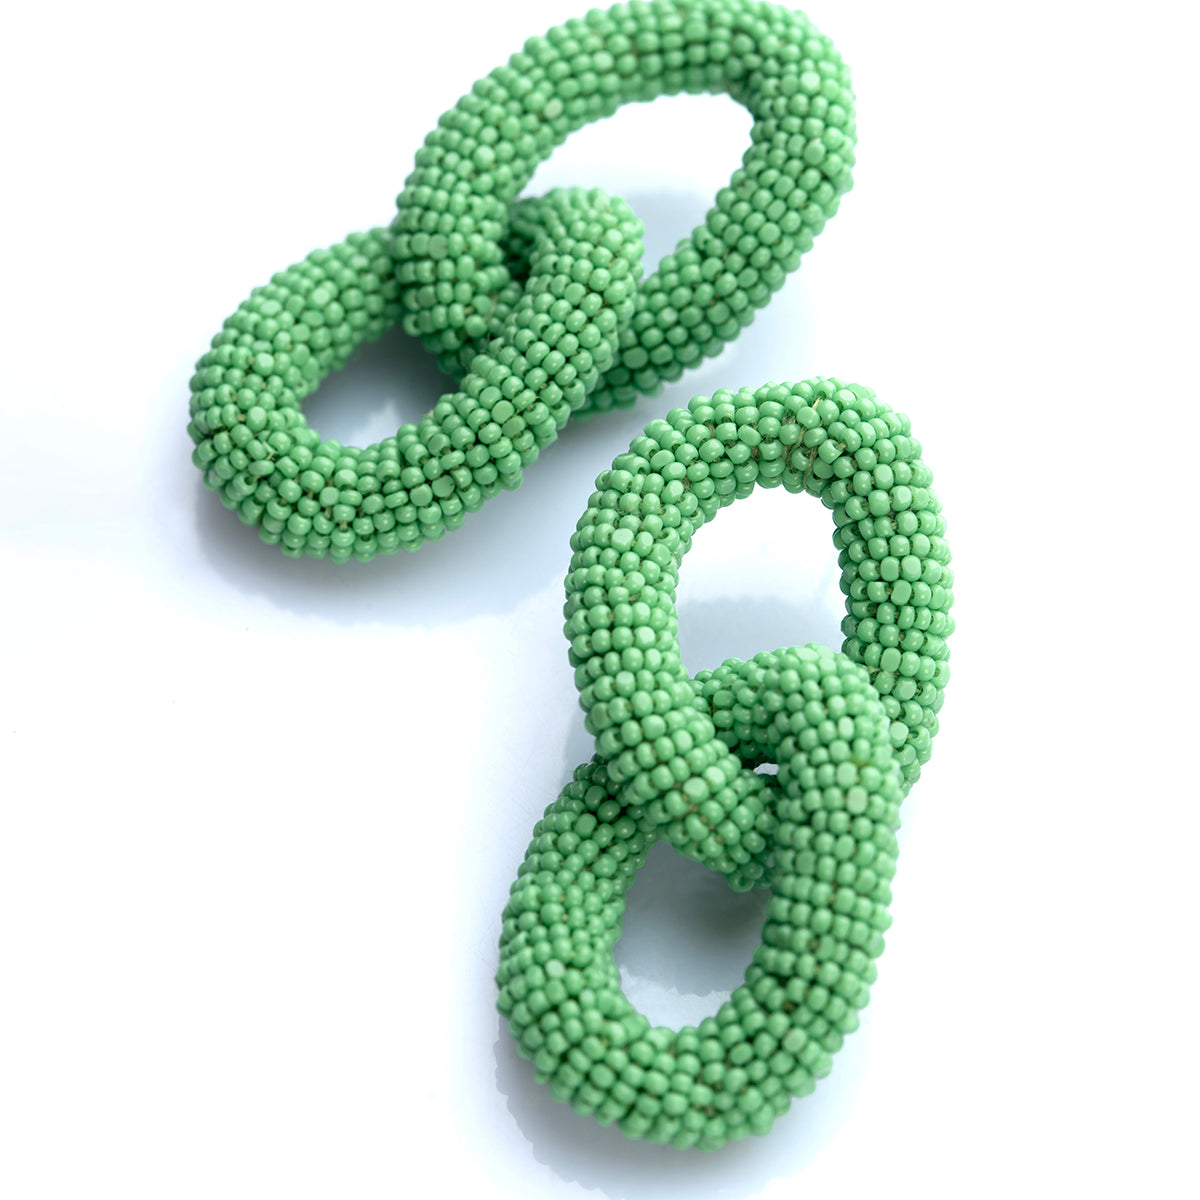 Handmade Luxury Deepa Gurnani Loulou Earrings in Green Color